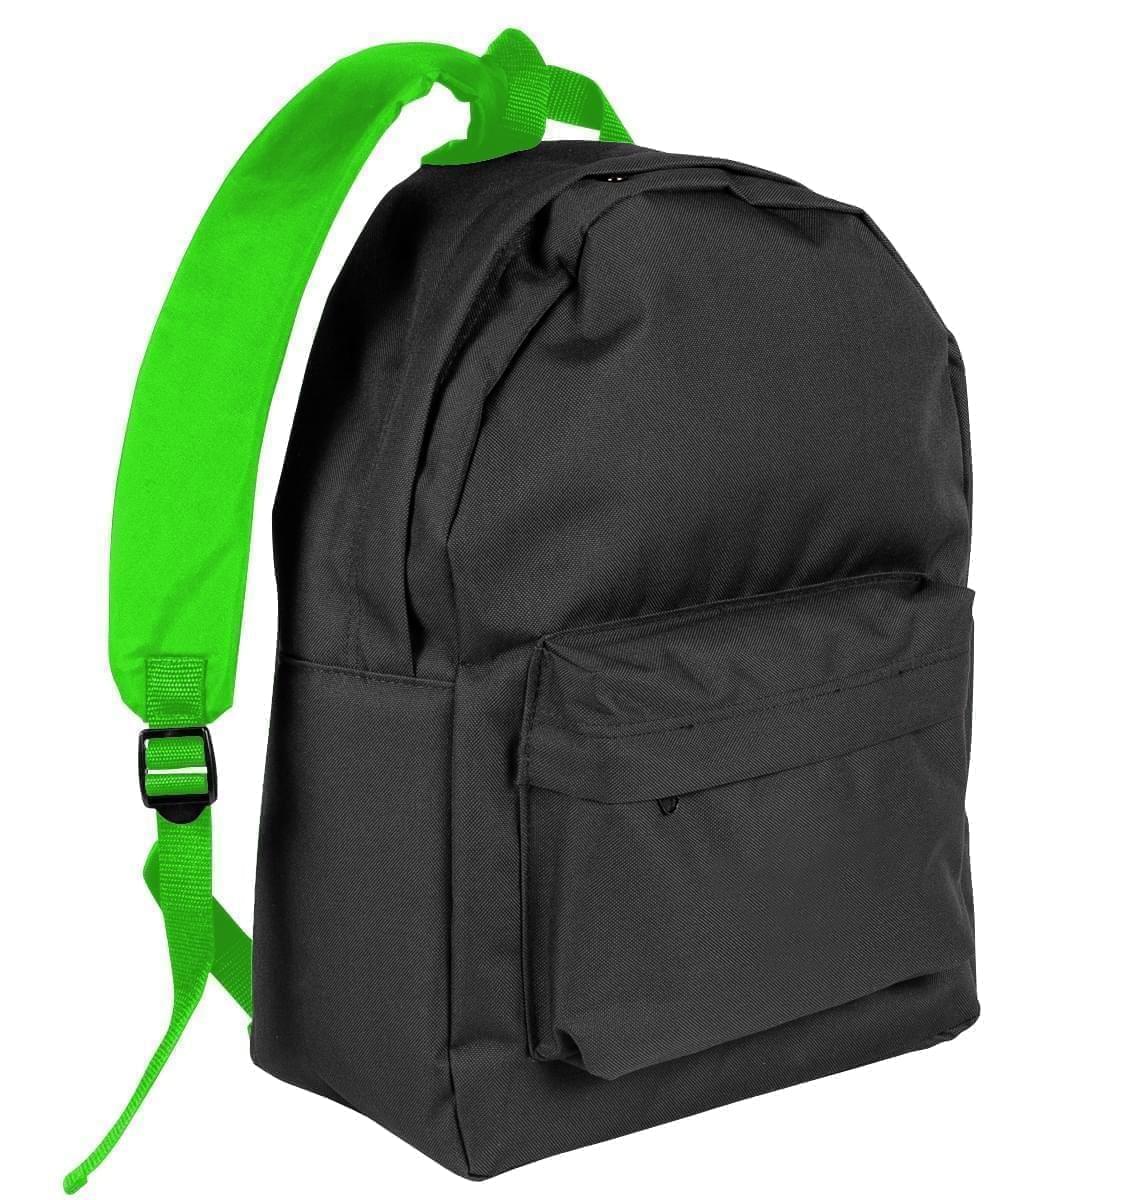 USA Made Nylon Poly Backpack Knapsacks, Black-Lime, 8960-AOY